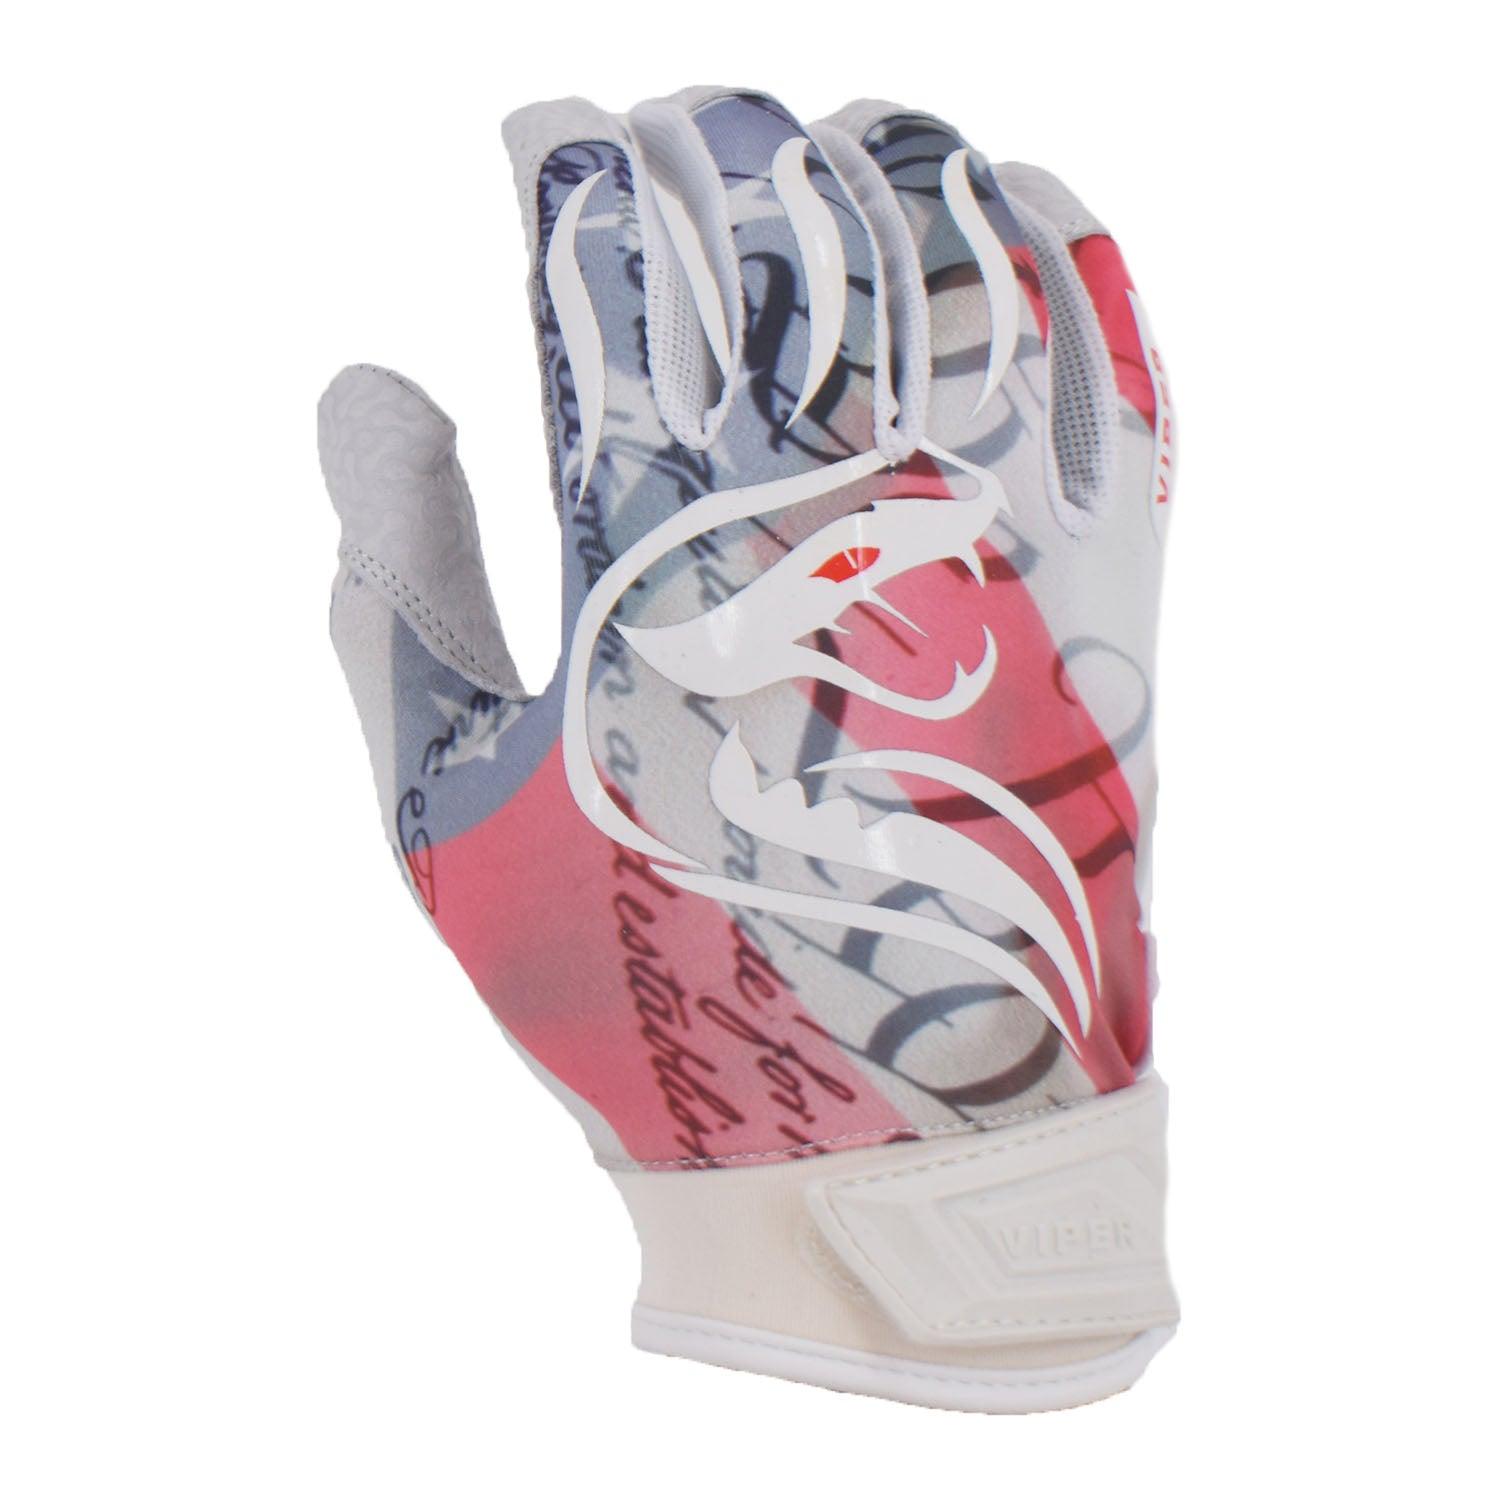 Viper Lite Premium Batting Gloves Leather Palm - We The People - Smash It Sports